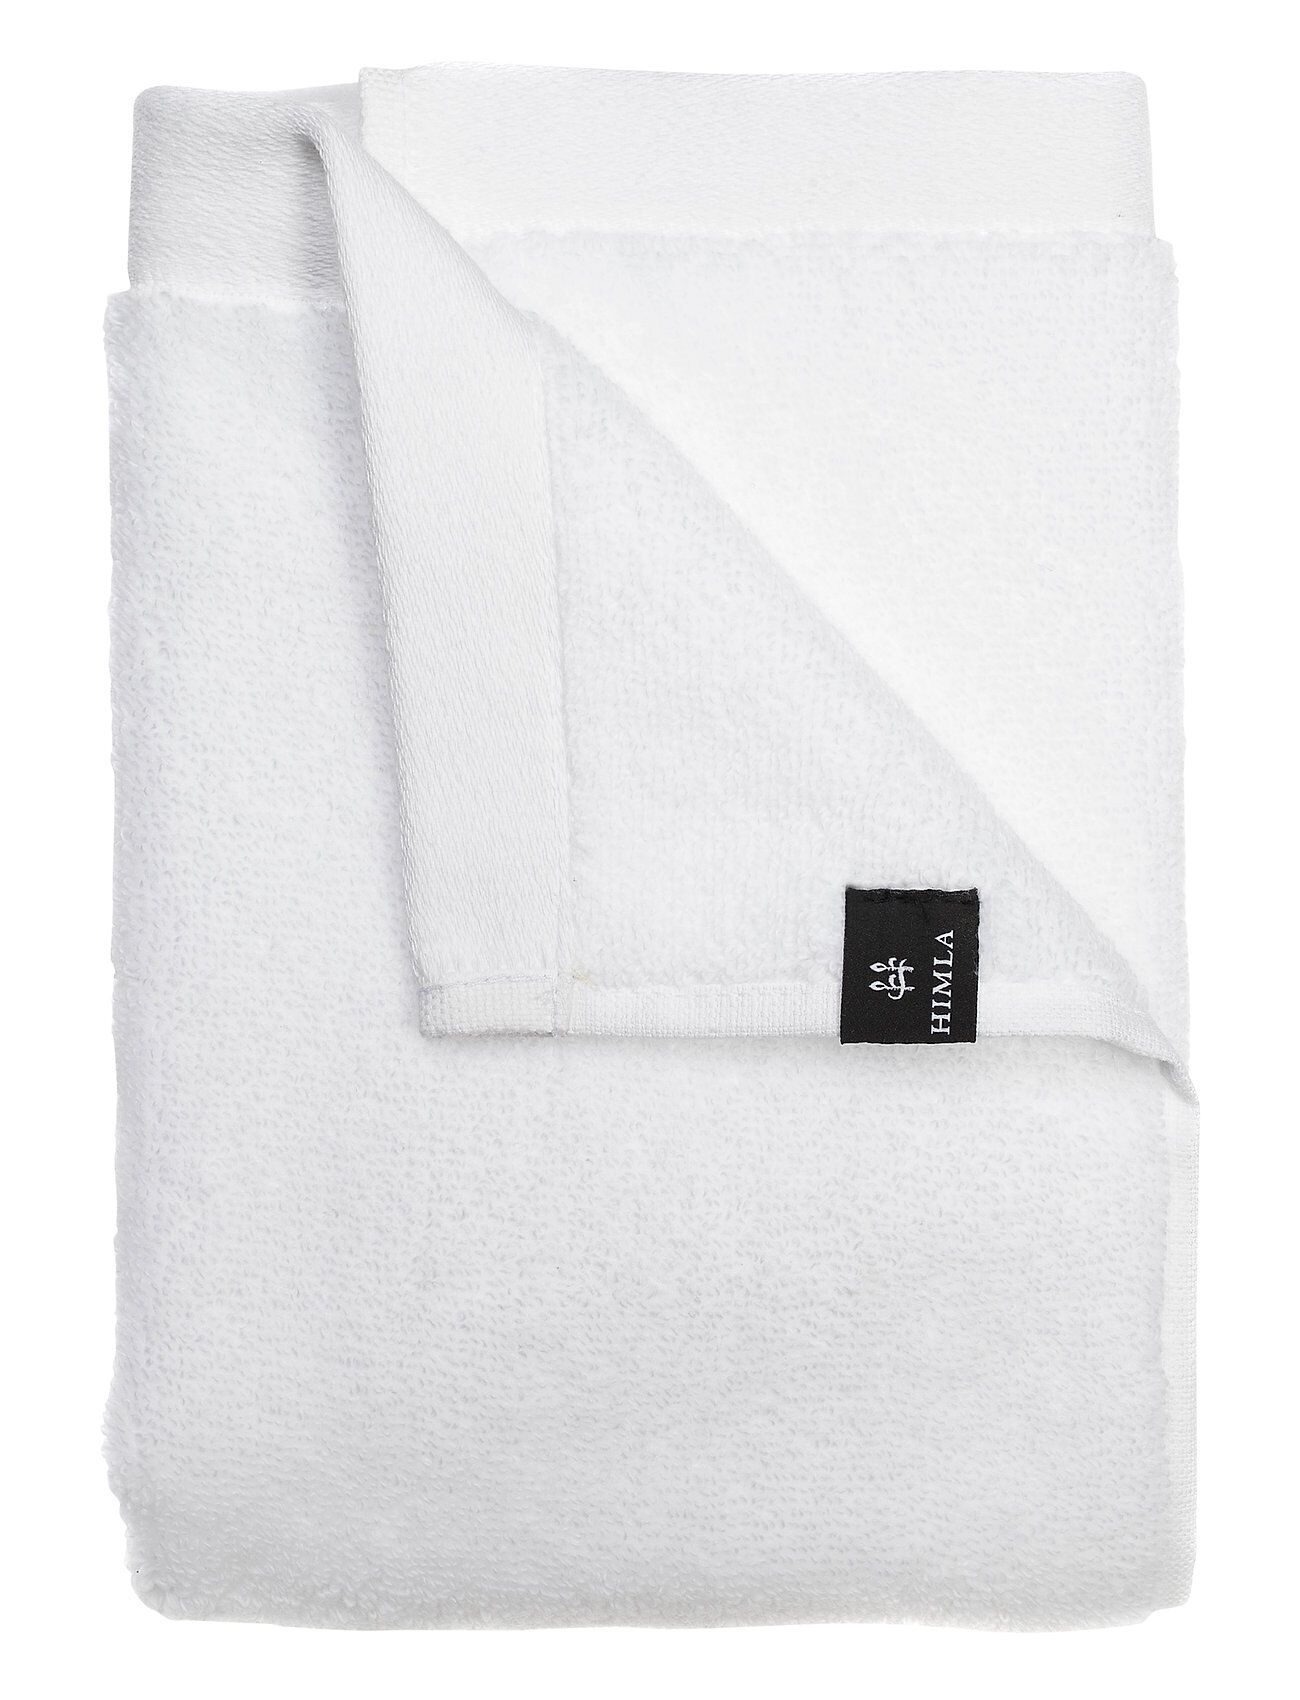 Himla Maxime Bath Sheet Home Textiles Bathroom Textiles Towels Hvit Himla